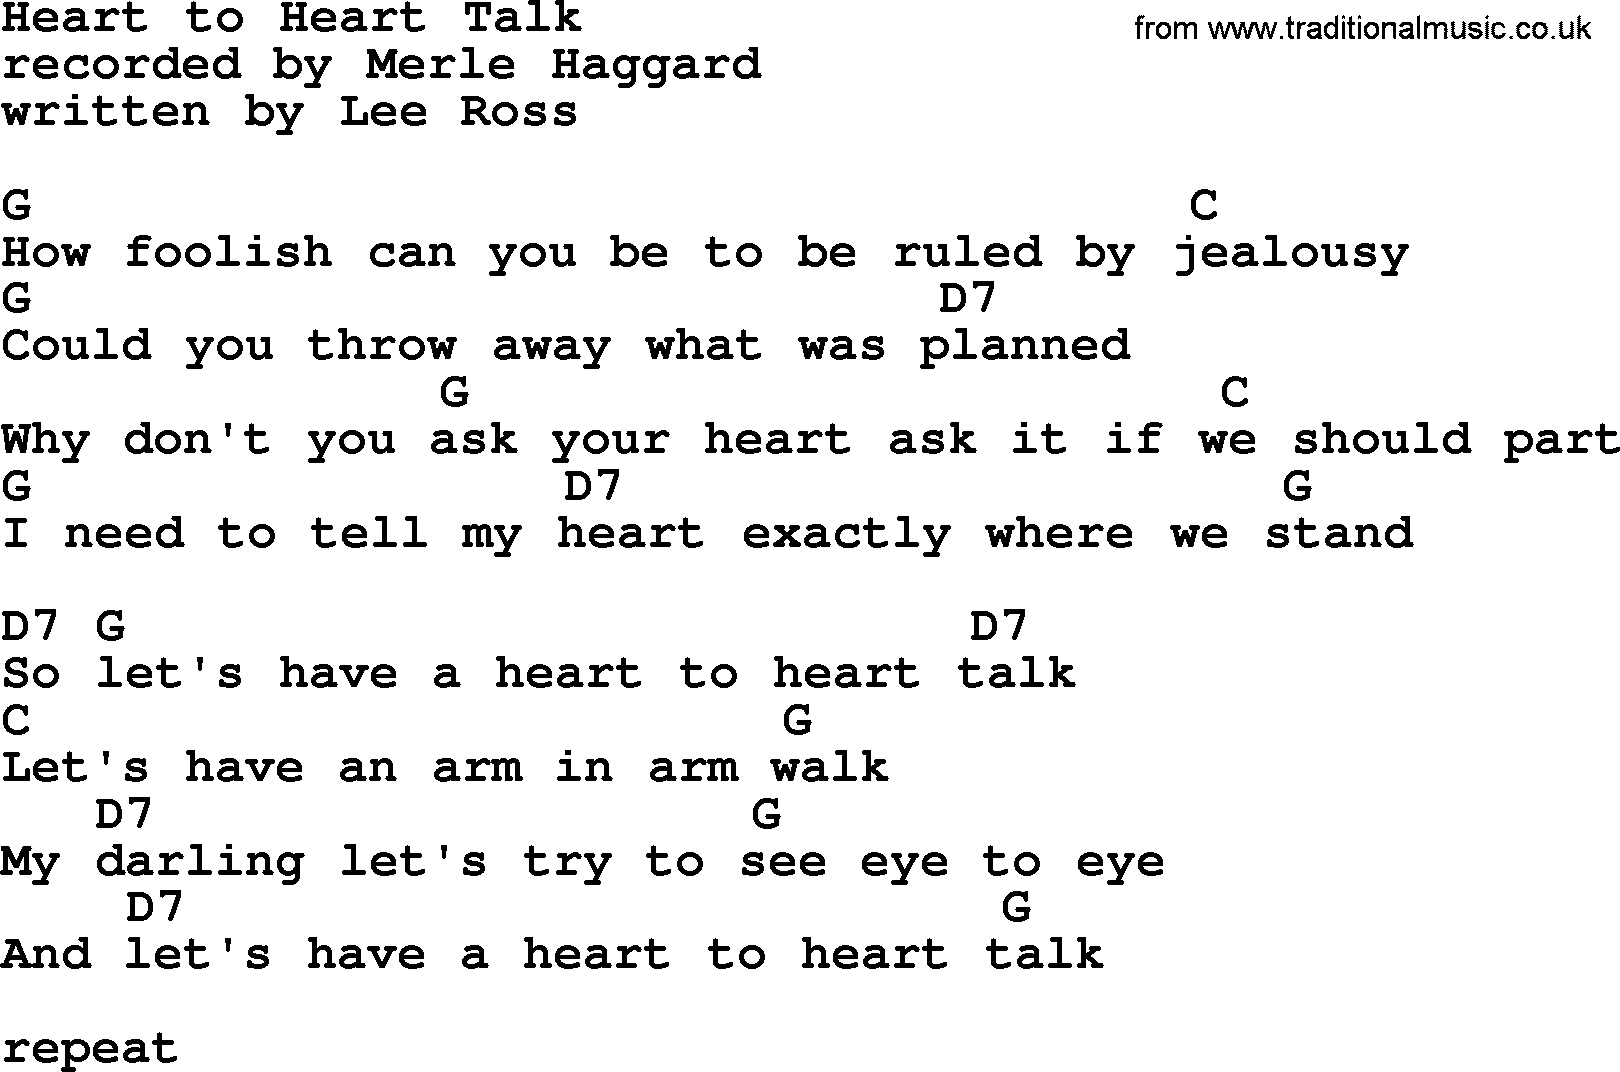 Merle Haggard song: Heart to Heart Talk, lyrics and chords